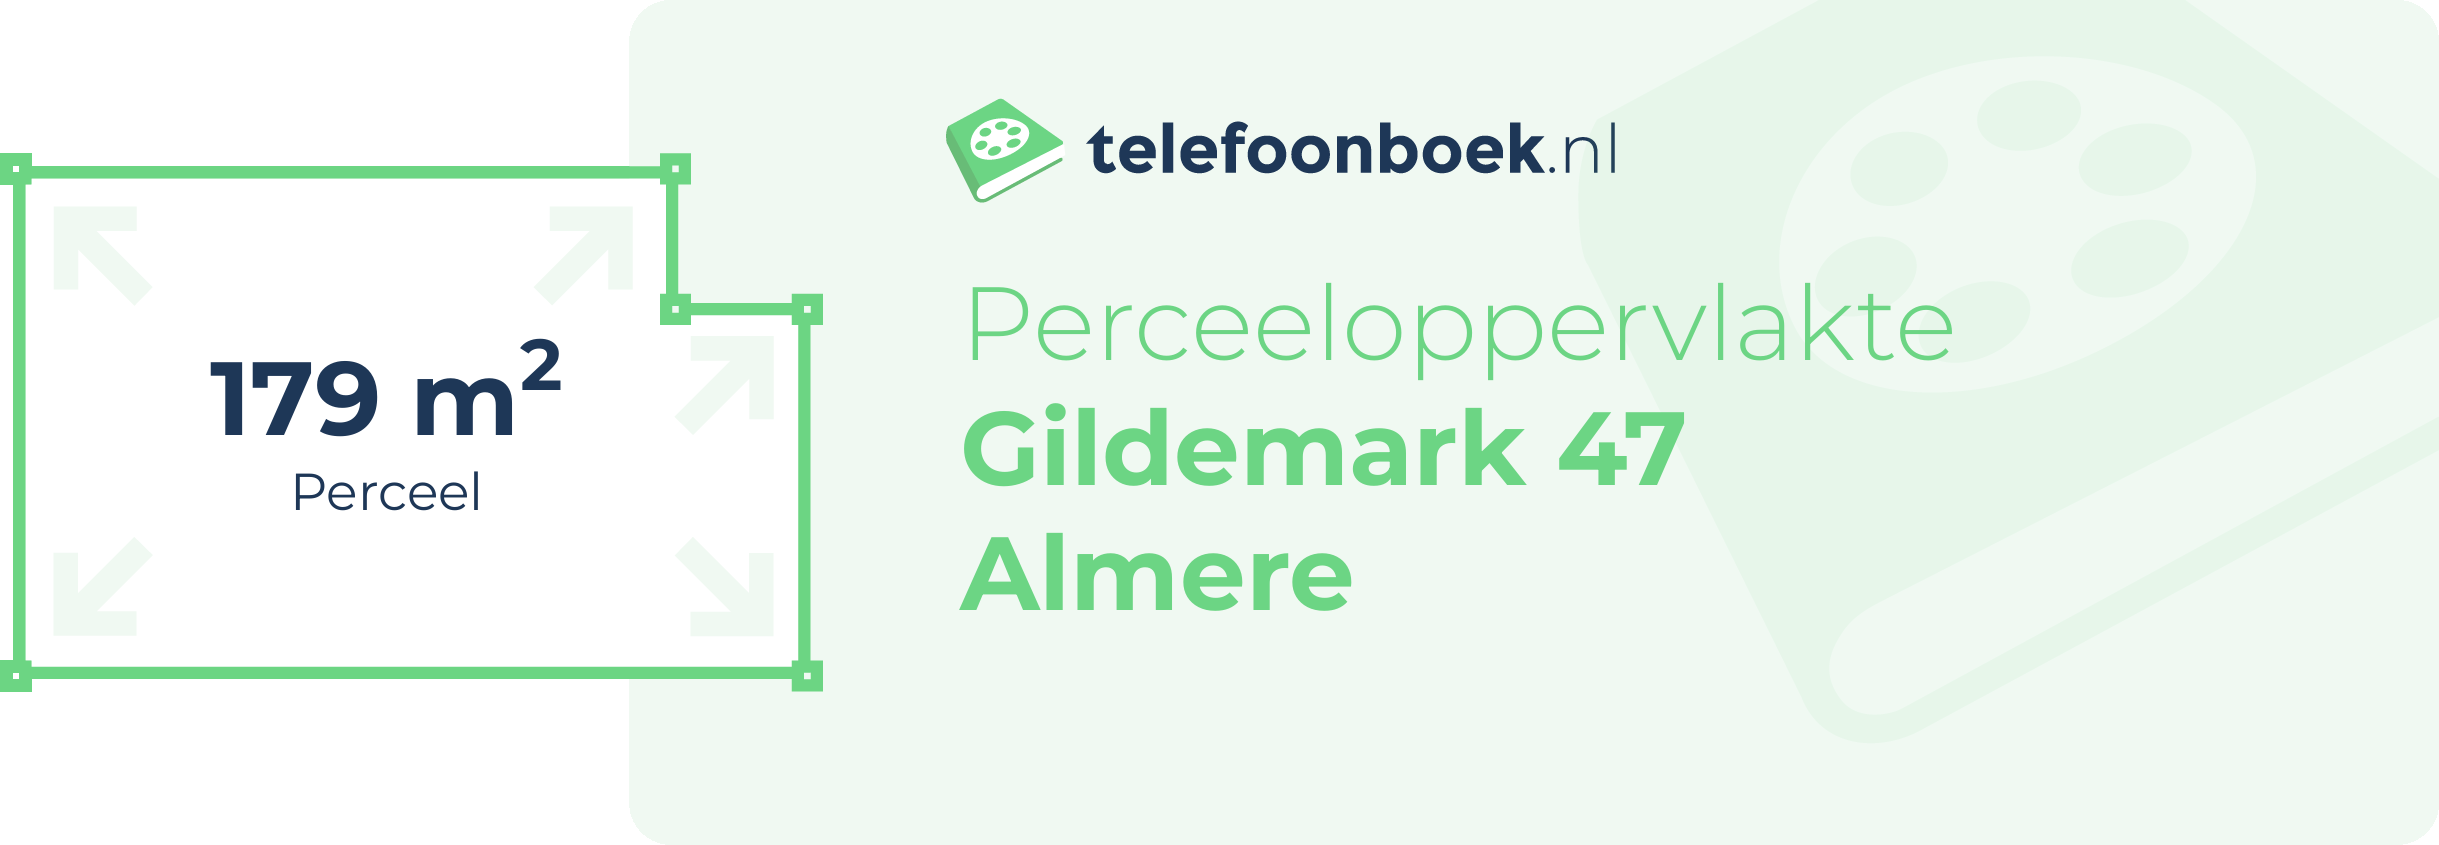 Perceeloppervlakte Gildemark 47 Almere